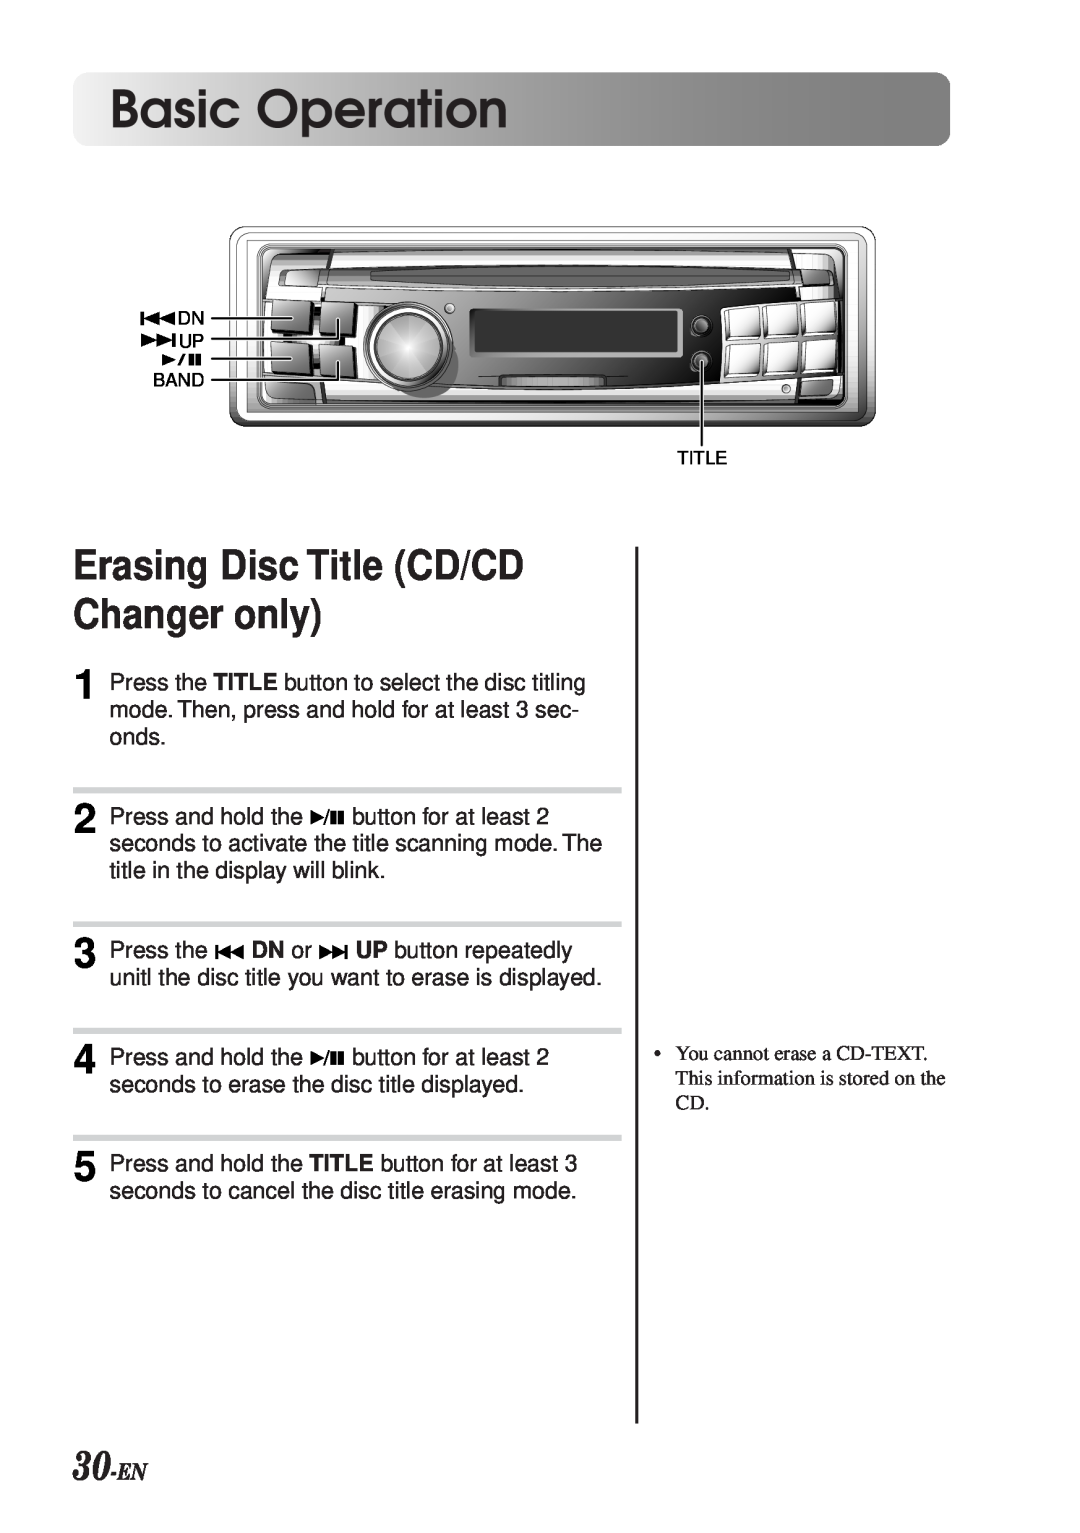 Alpine CDA-7990 manual Erasing Disc Title CD/CD Changer only, 30-EN, Basic Operation 